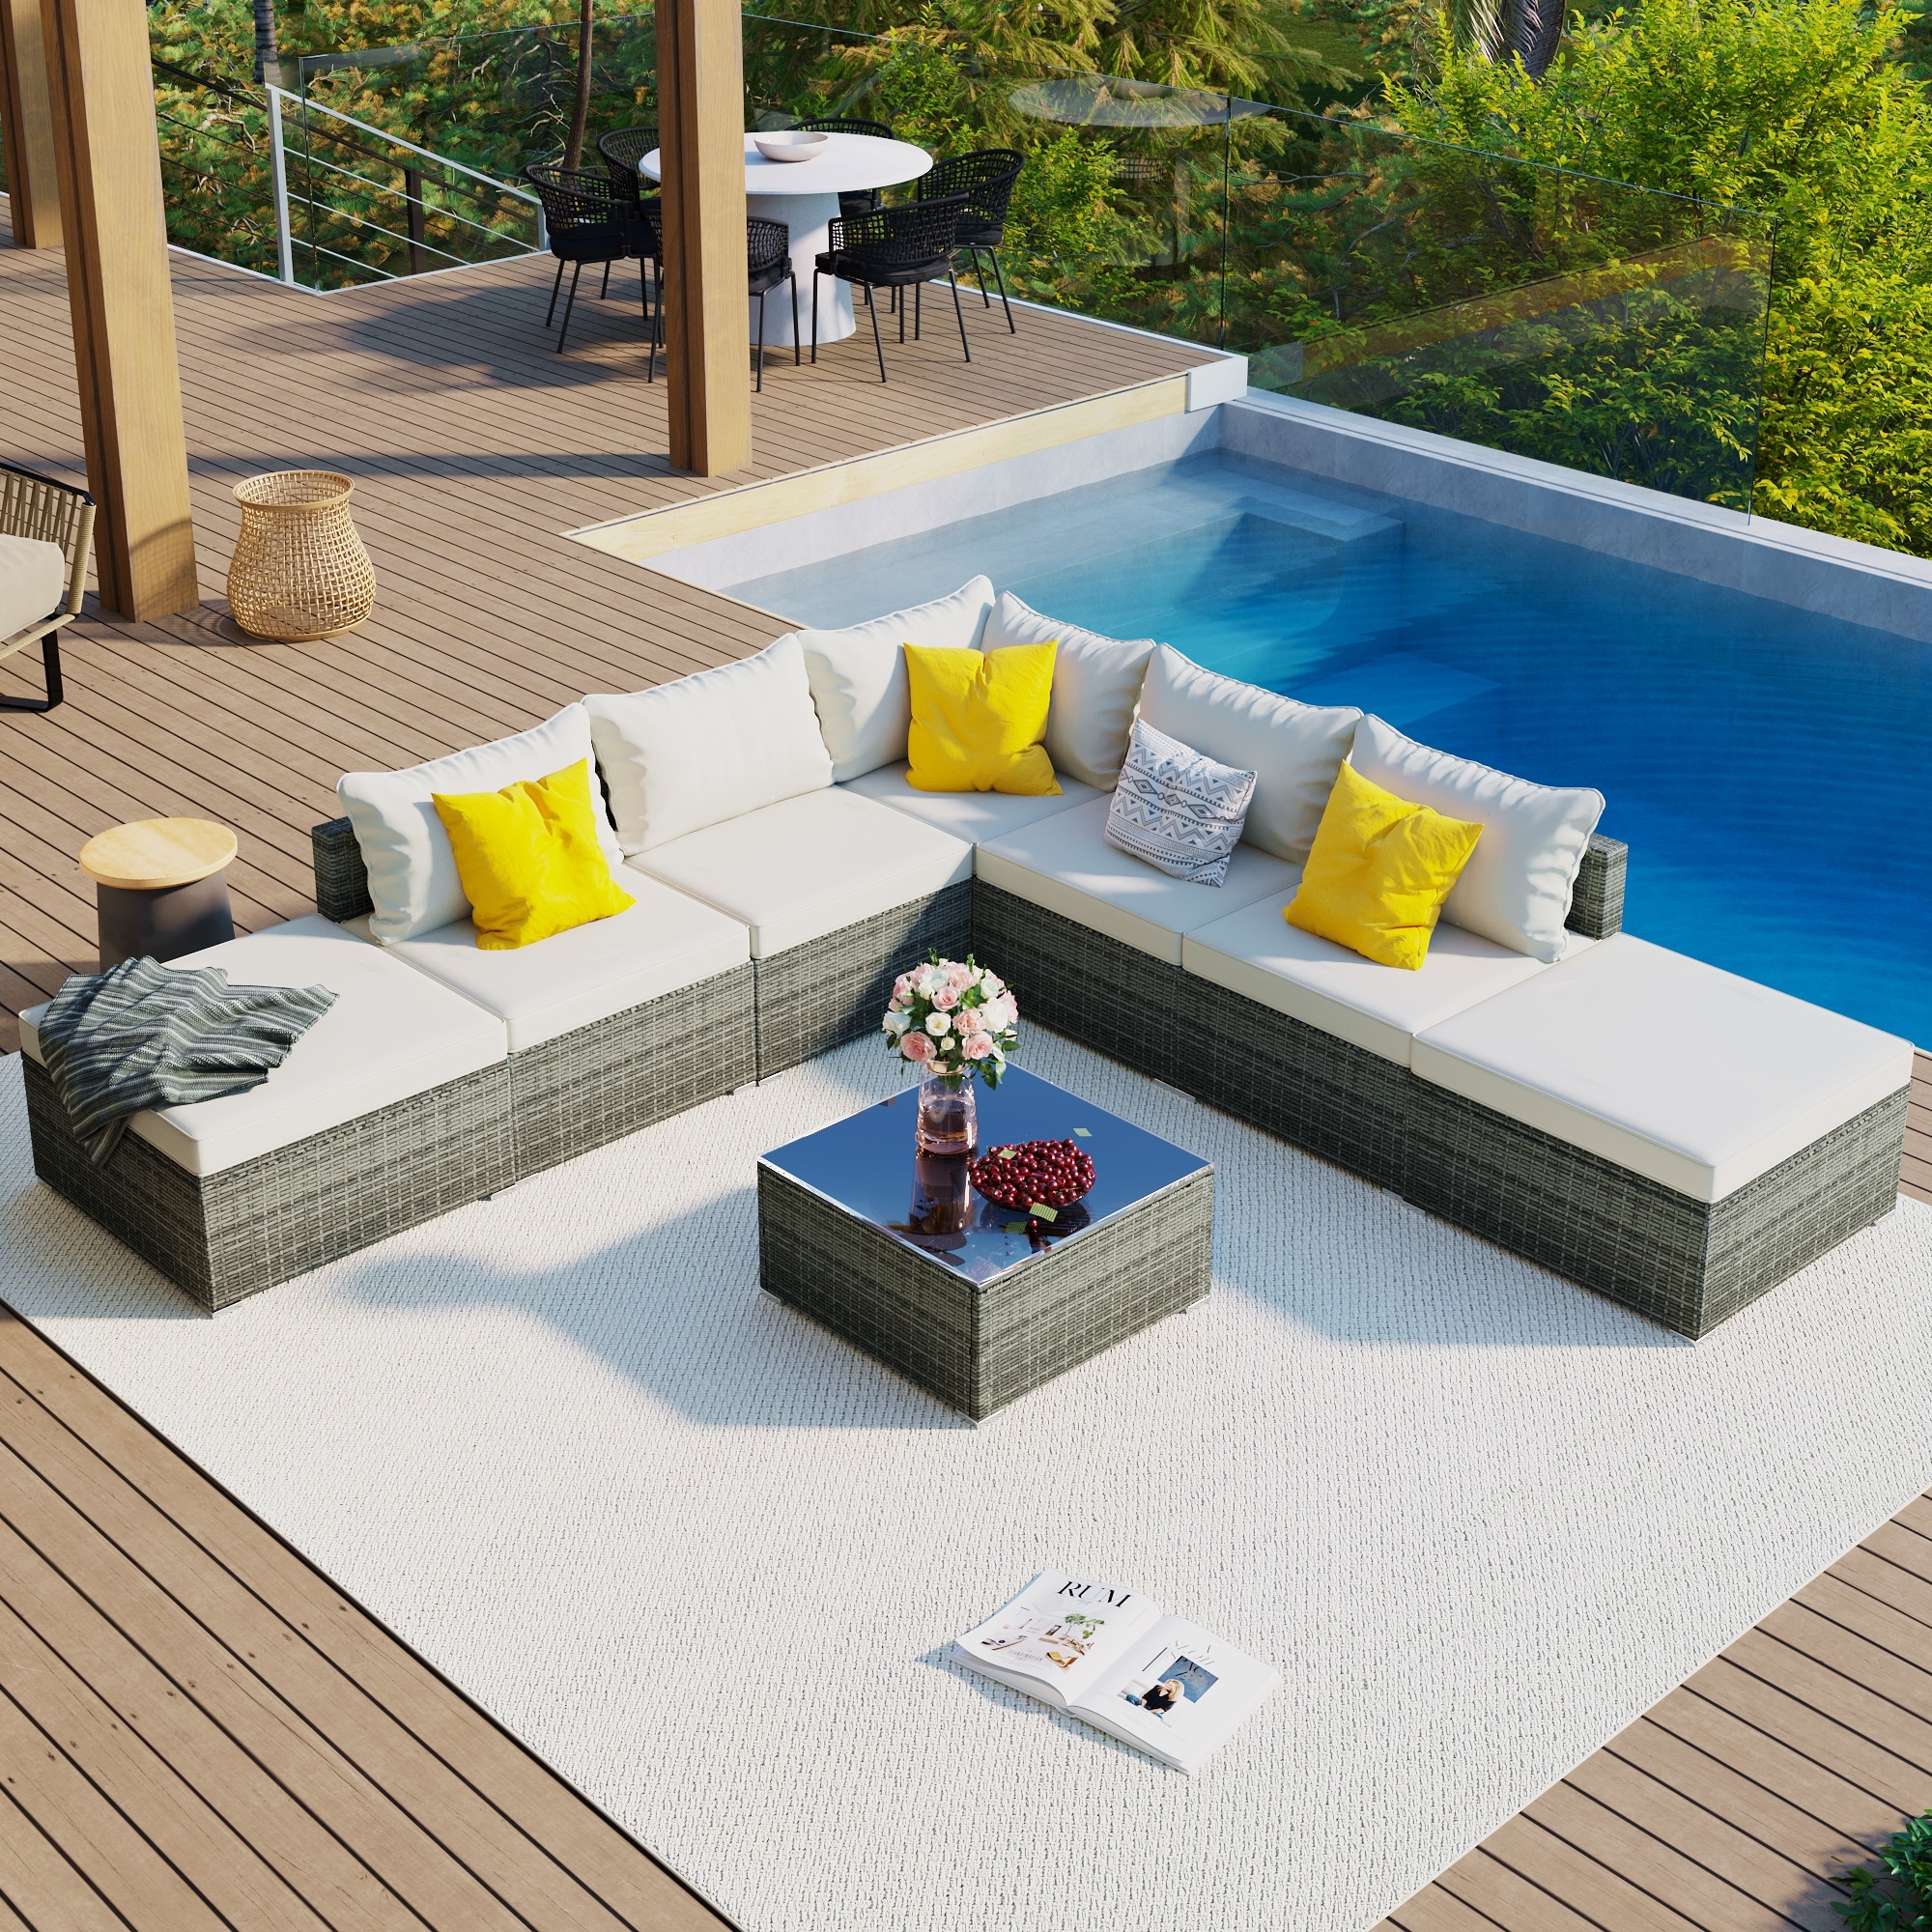 Versatile 8-piece Garden Sofa Set For 5-8  Includes 1 Corner Sofa  4 Single Sofas  2 Ottomans and 1 Coffee Table.